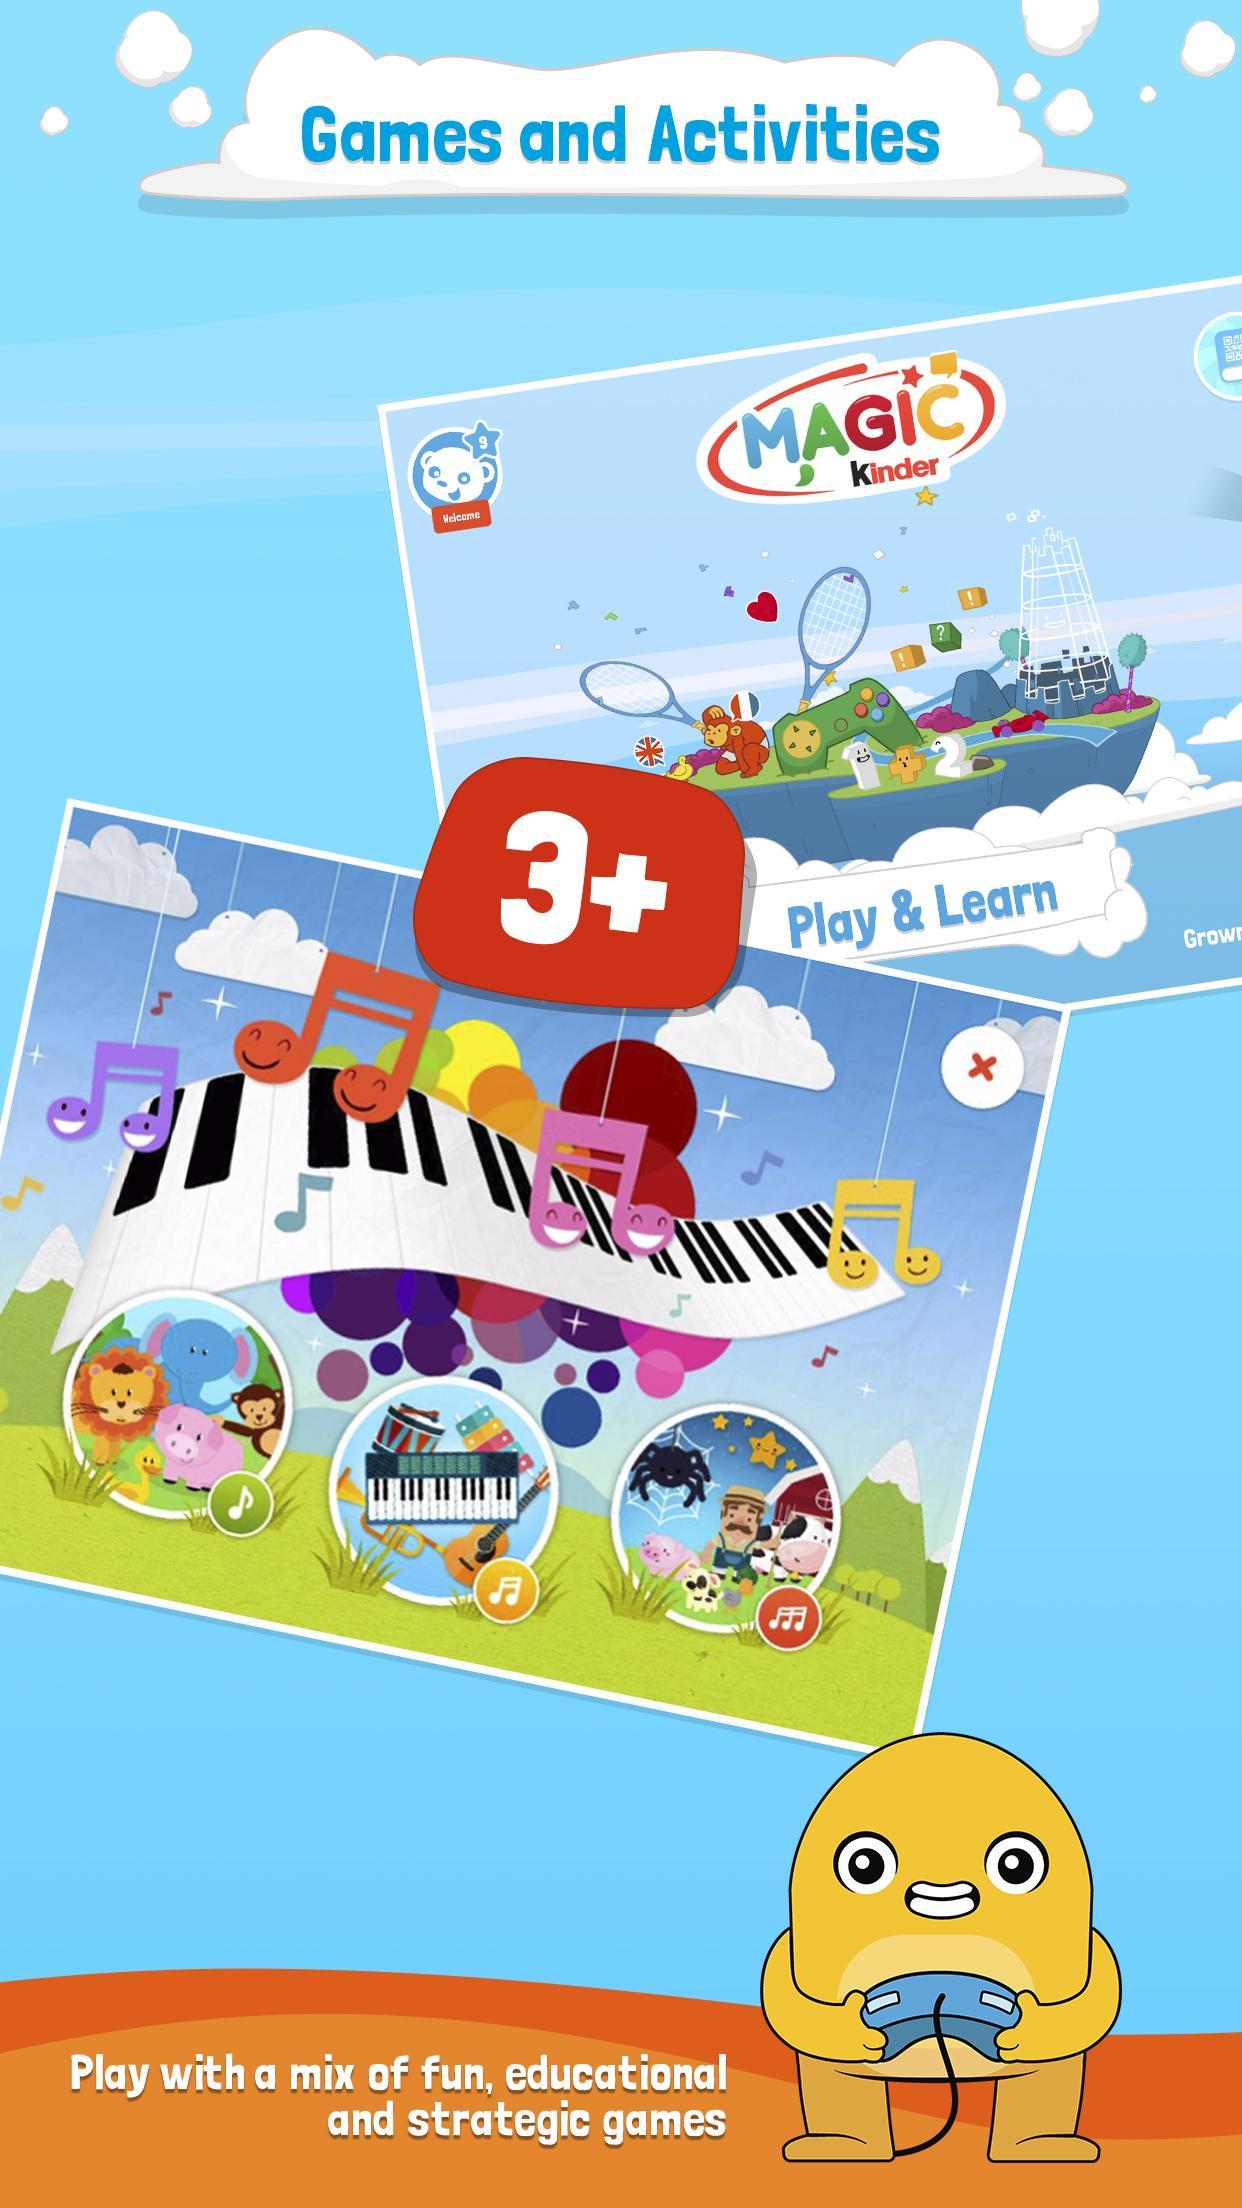 Magic Kinder Official App - Free Family Games 7.1.140 Screenshot 3